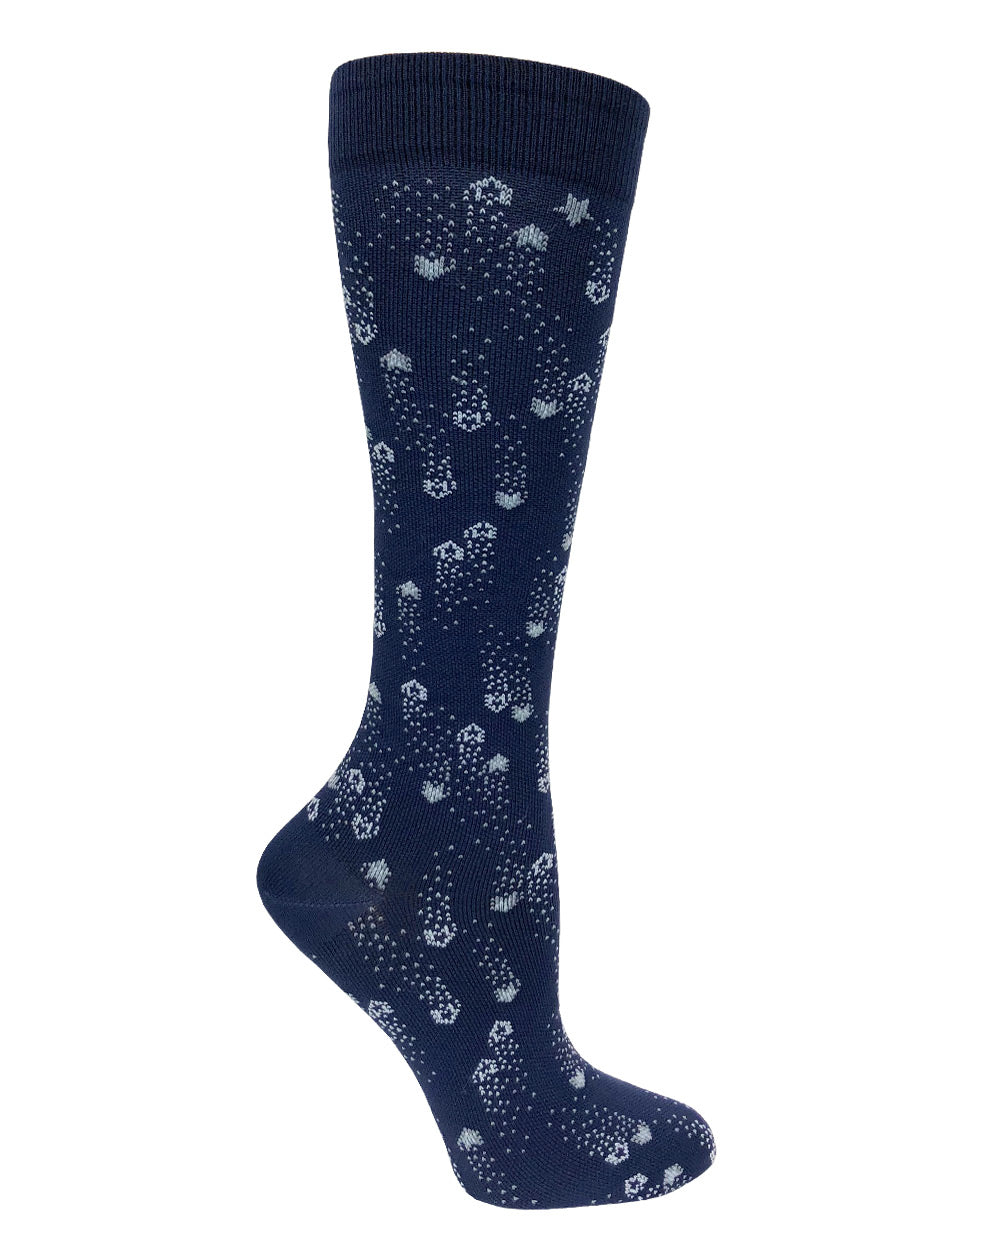 12" Premium Knit Compression Socks - Shooting Stars Navy